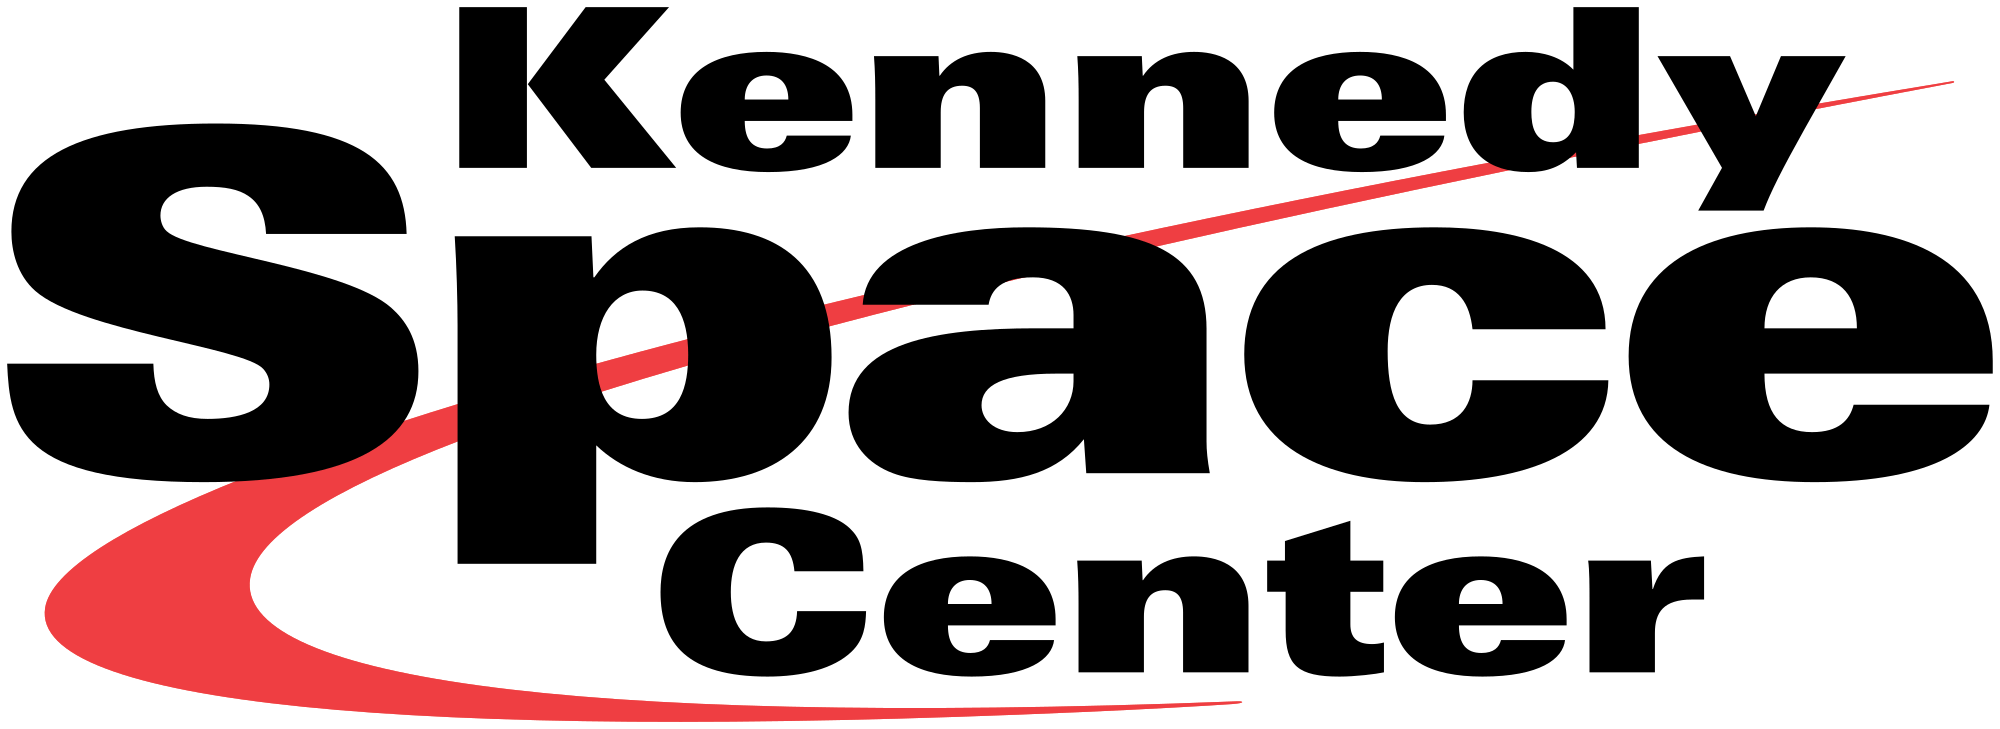 Kennedy Logo - Kennedy Space Center Logo.svg